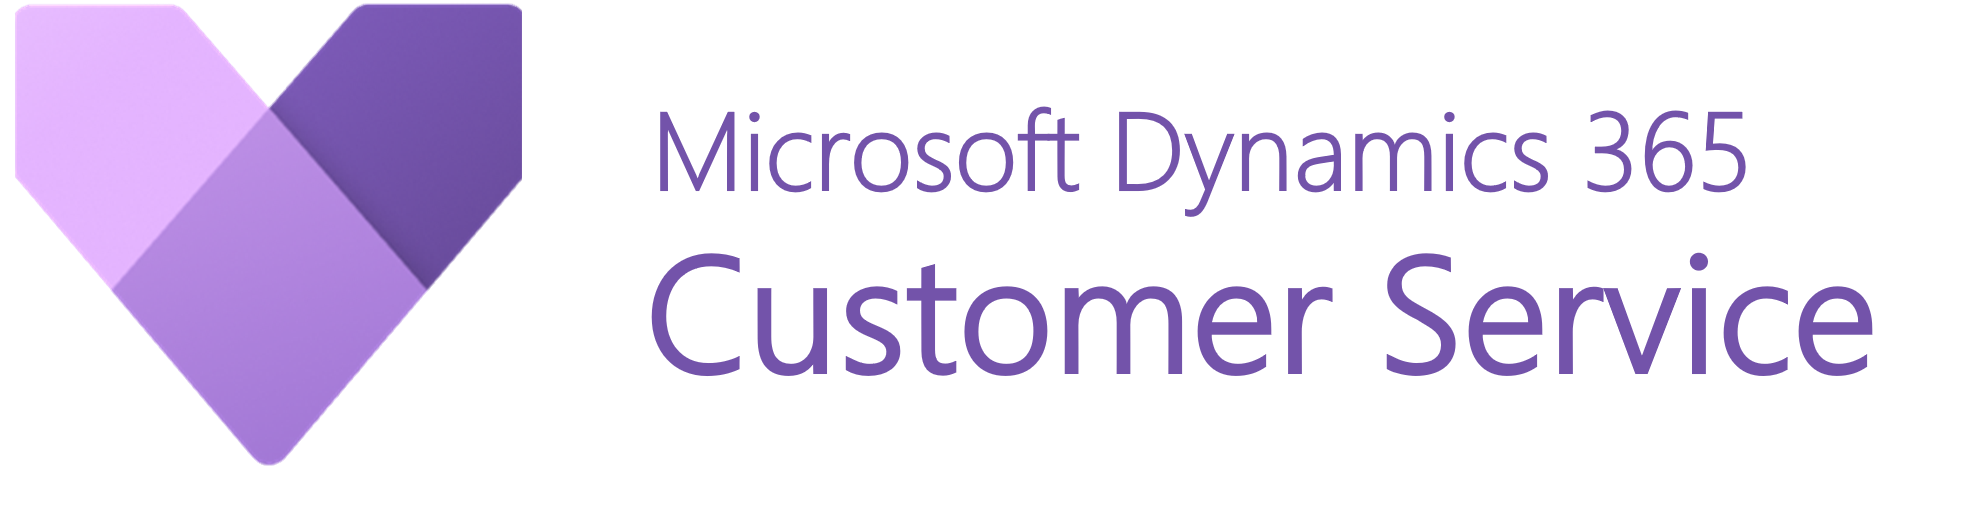 Dynamics 365 customer service